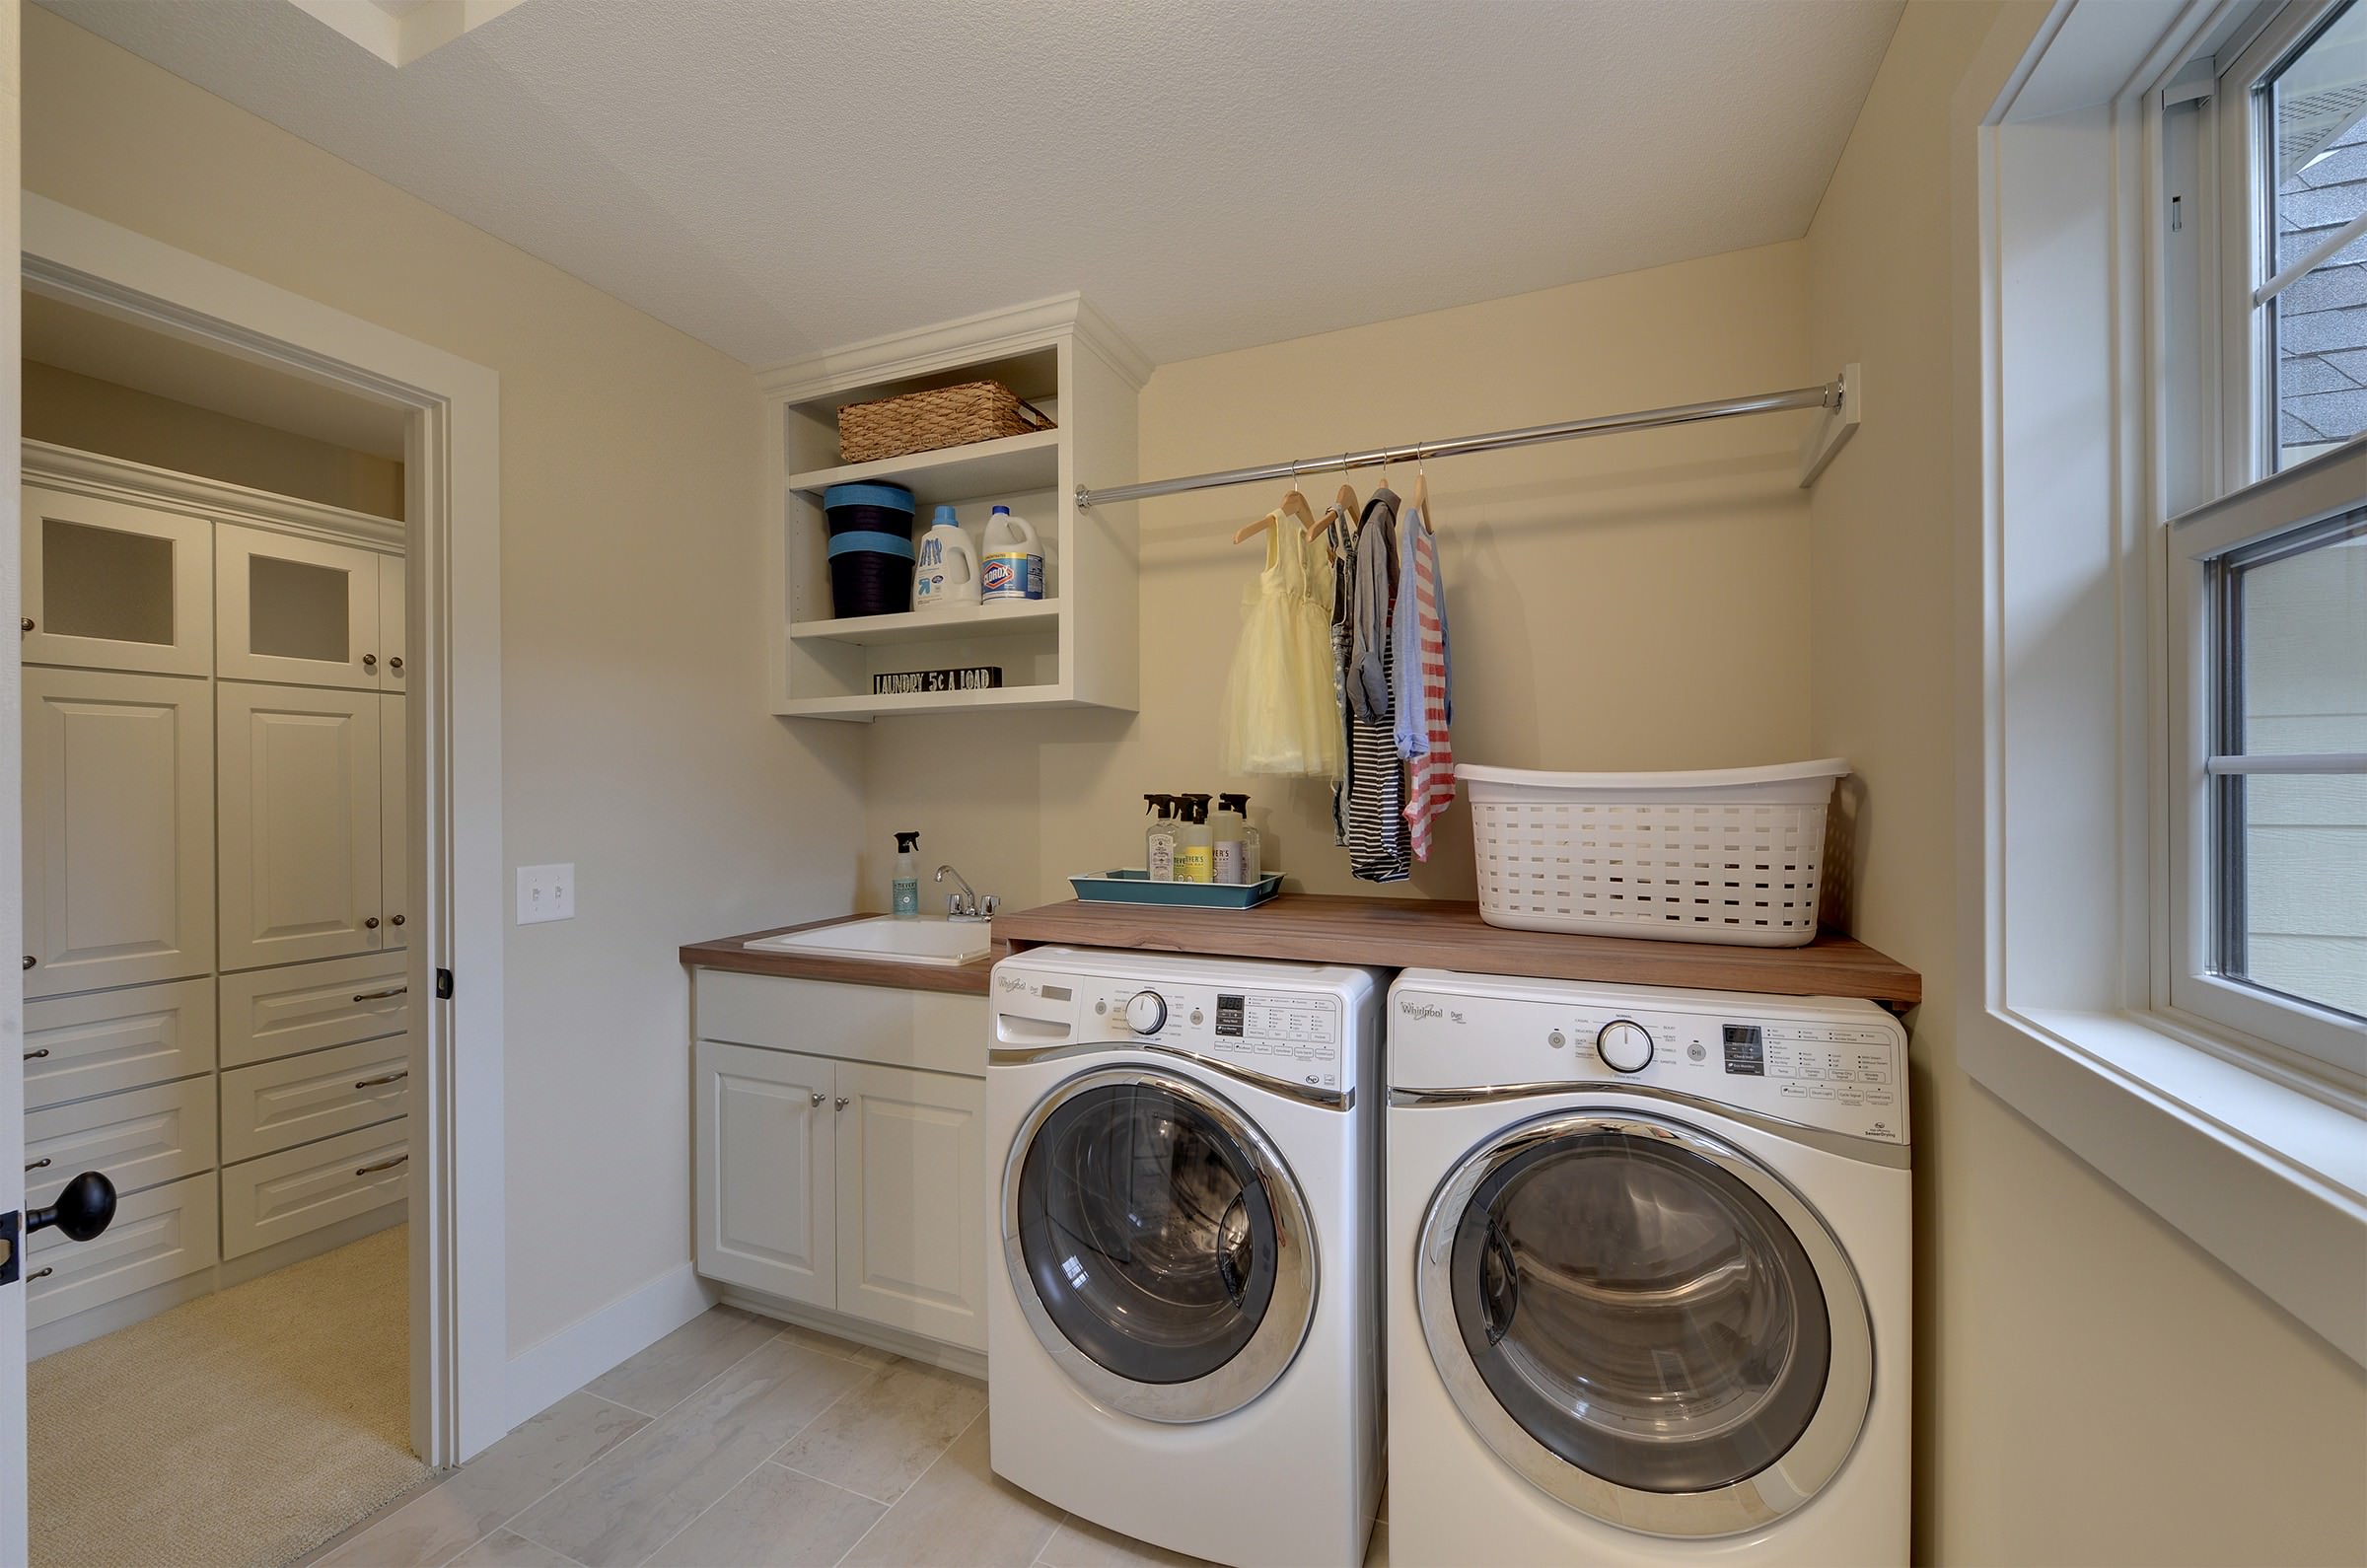 Second Floor Laundry Room - Photos & Ideas | Houzz